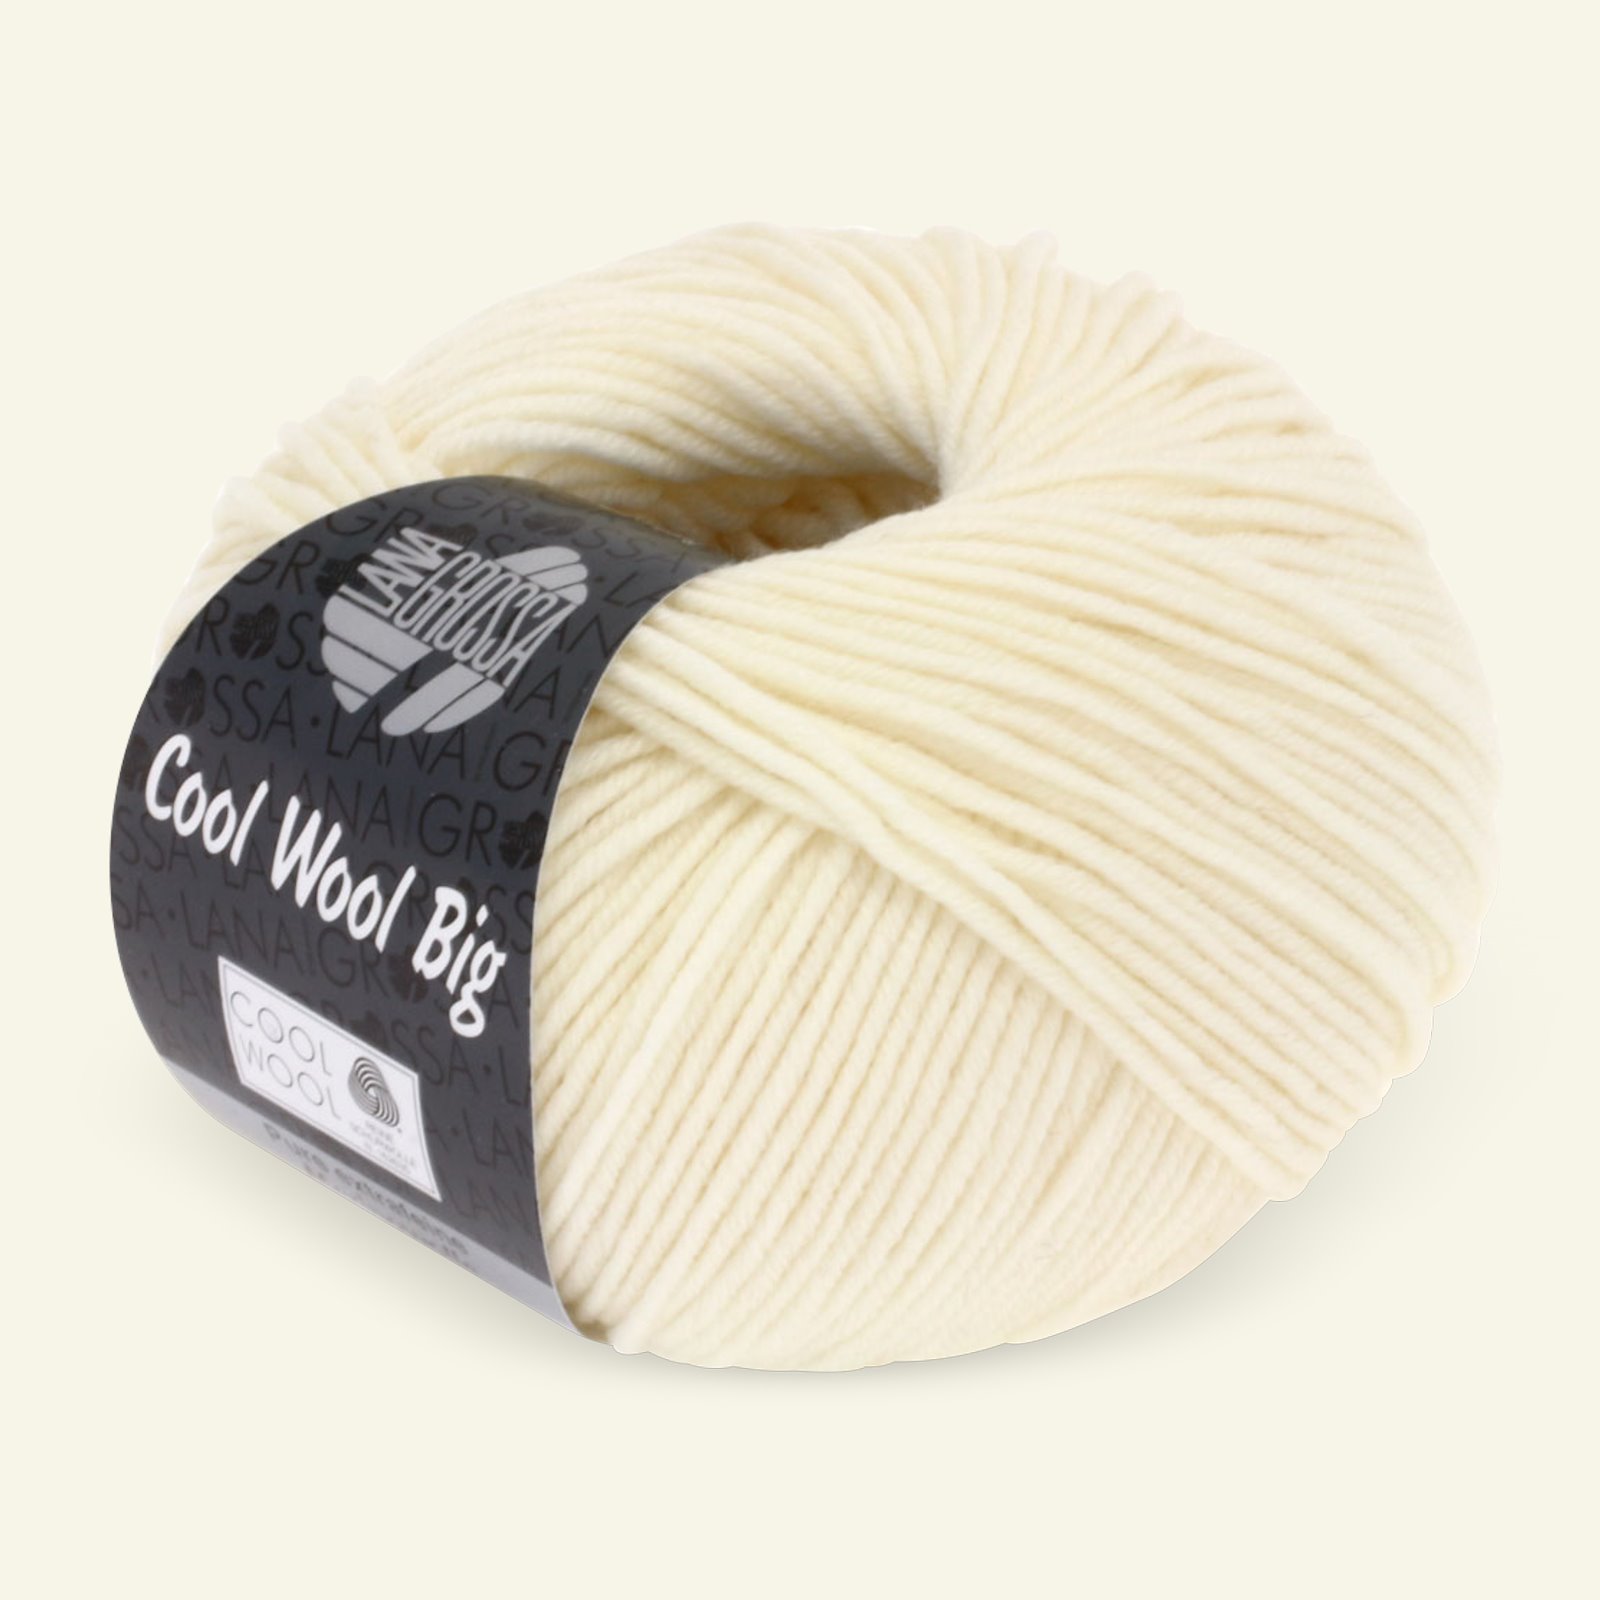 Lana Grossa, extrafine merino wool yarn "Cool Wool Big", offwhite 90001109_pack